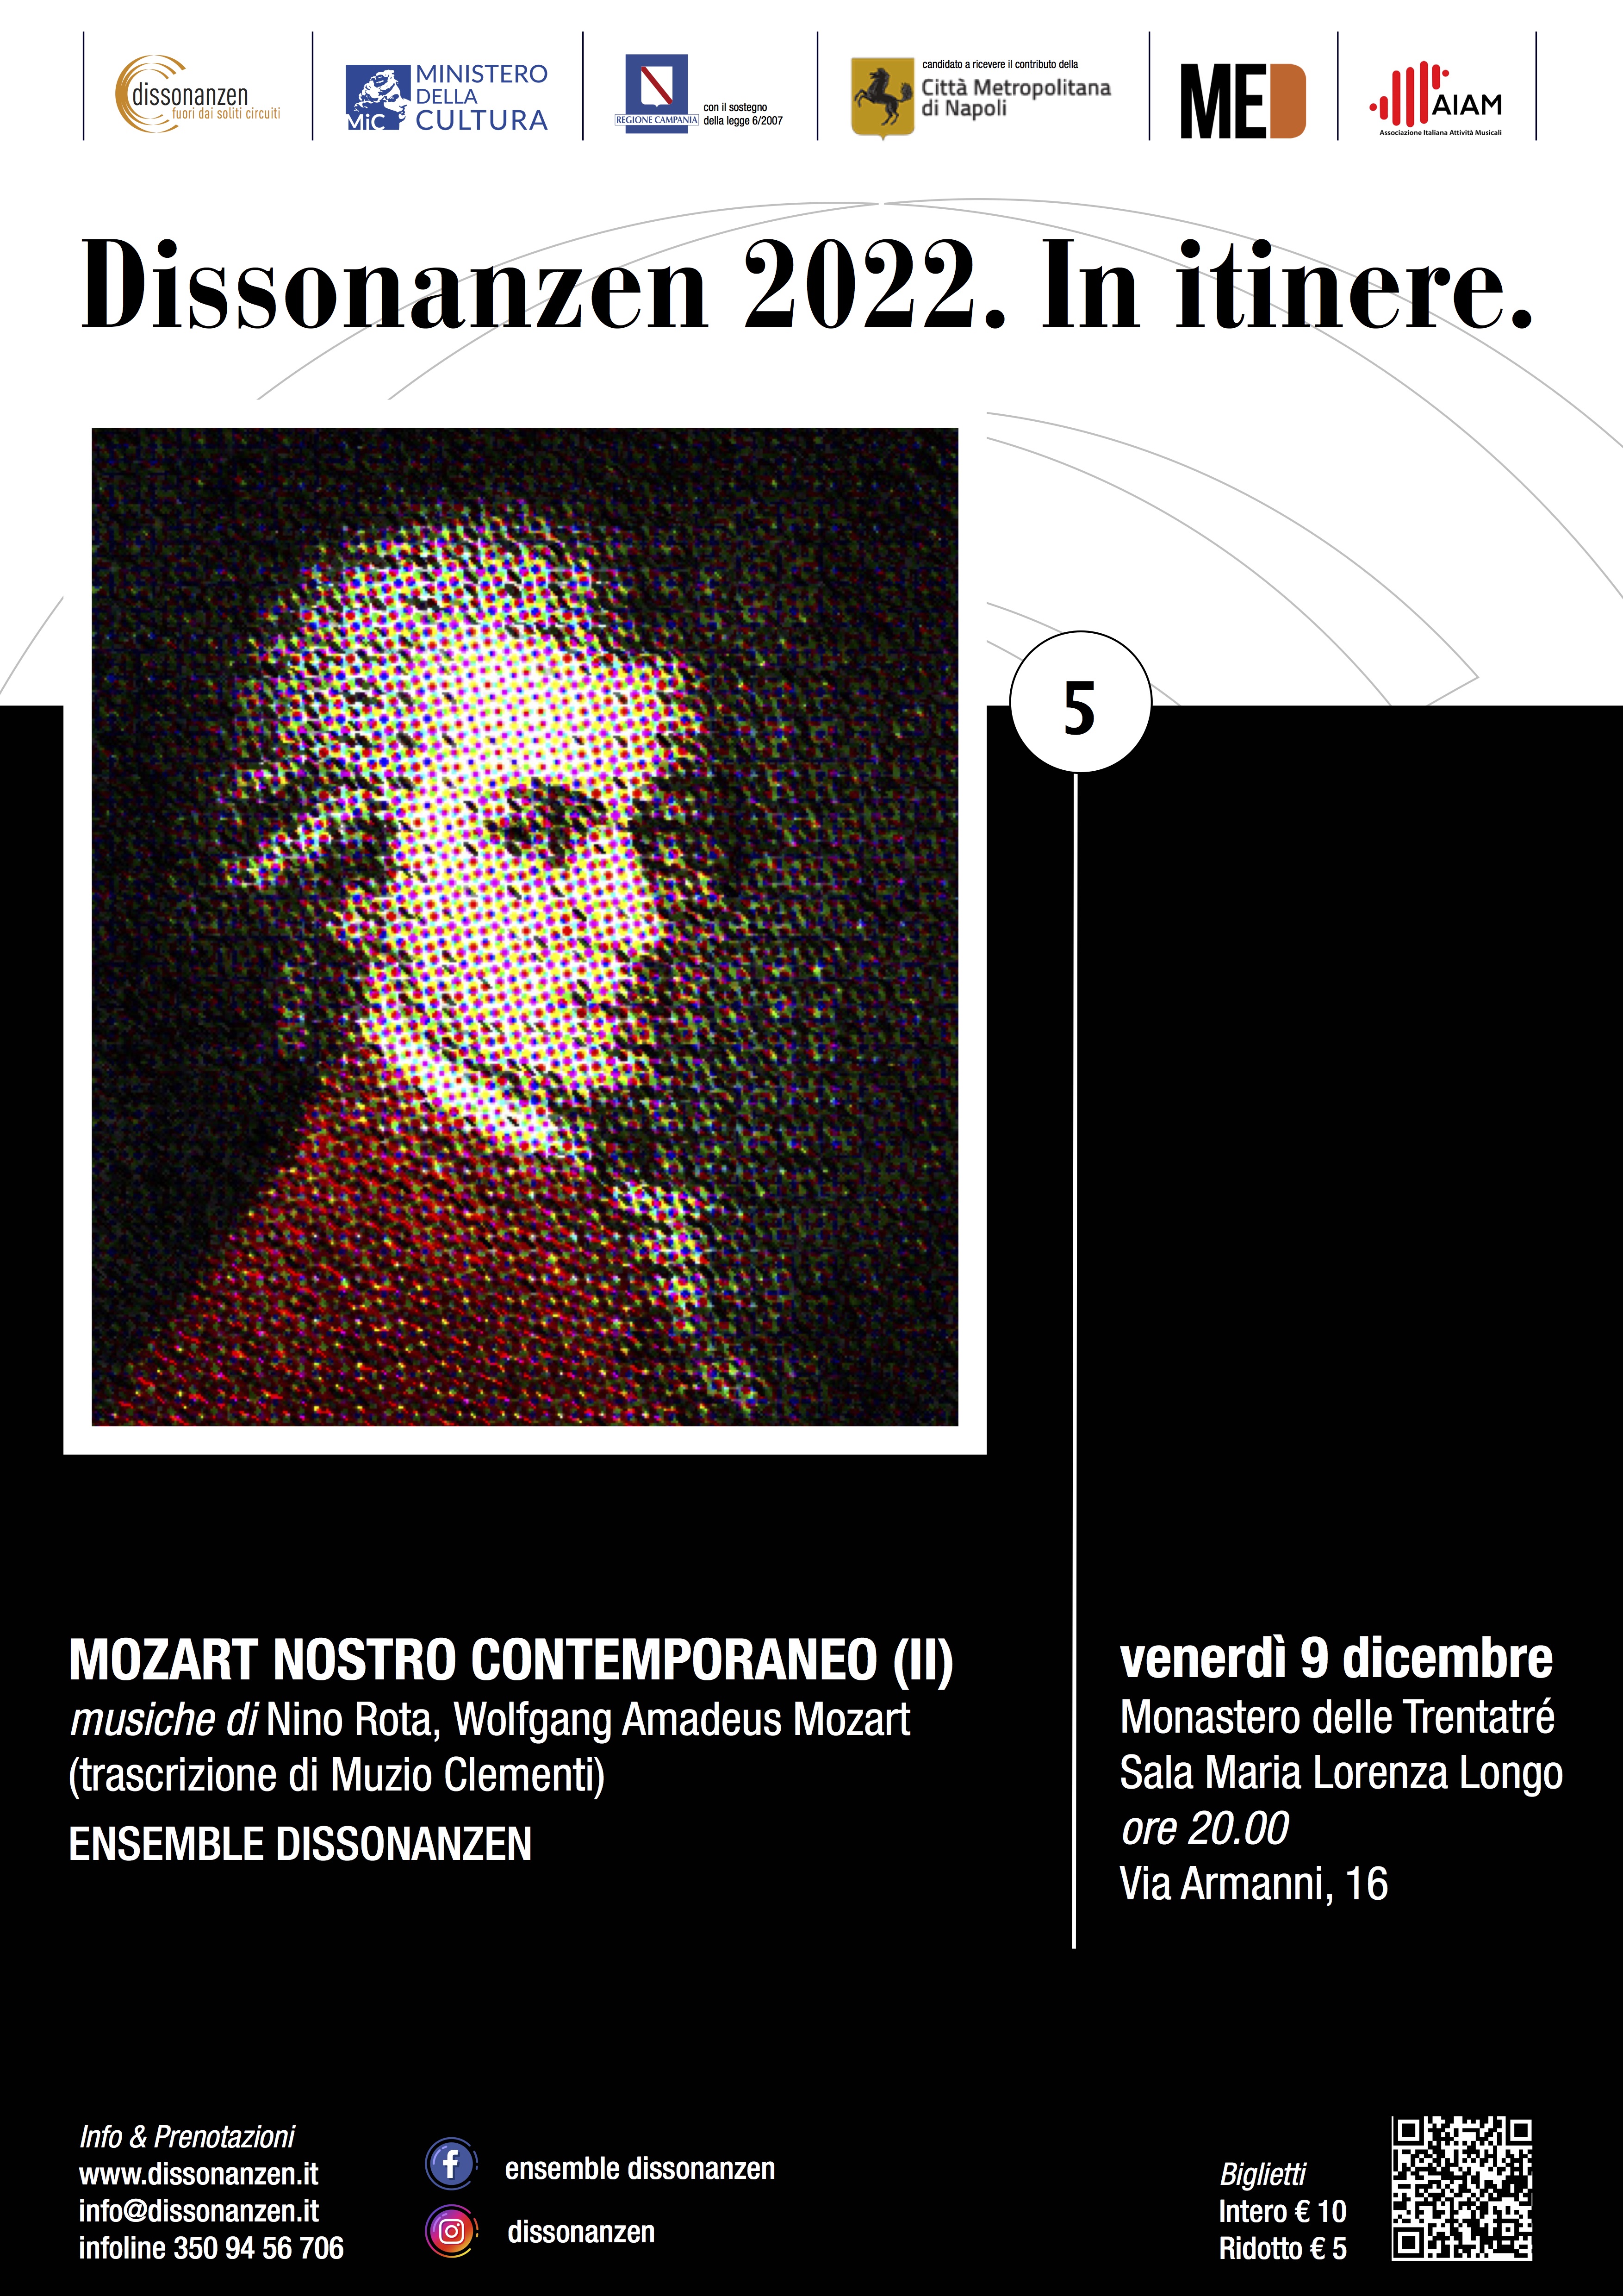 Mozart nostro contemporaneo